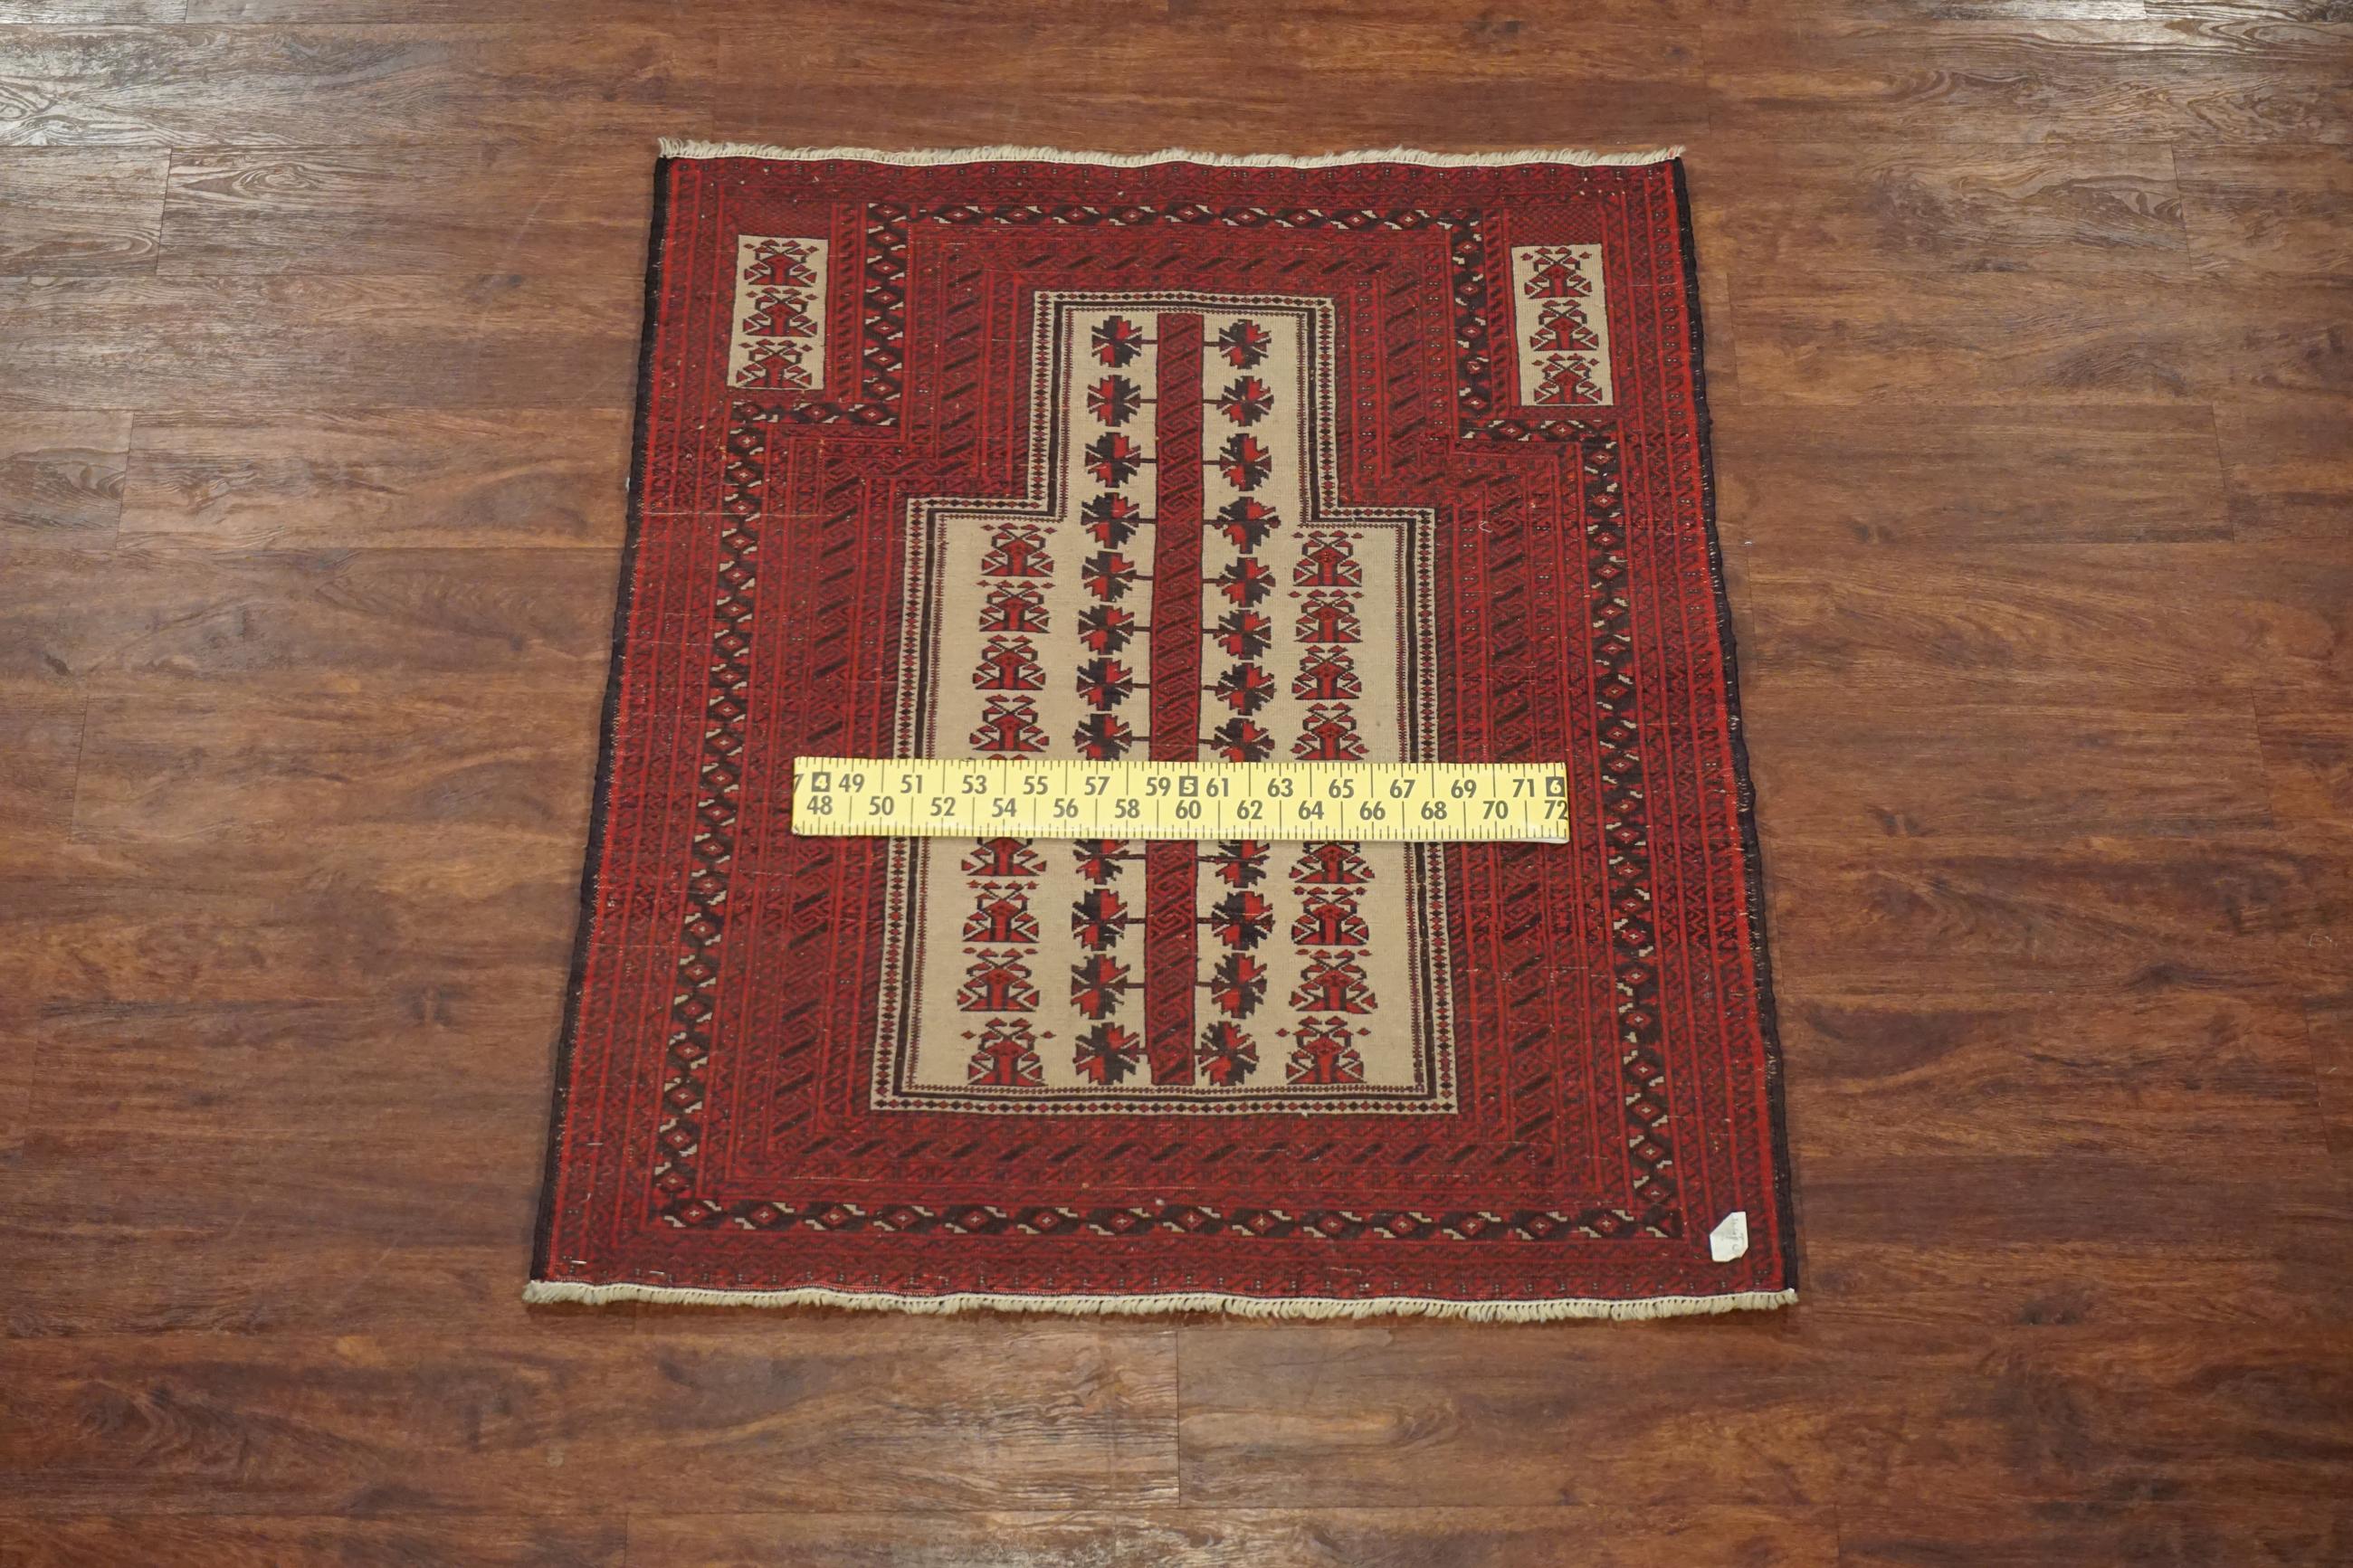 Small square Turkoman rrayer rug in a tribal design,

circa 1960

Measures: 3' 1